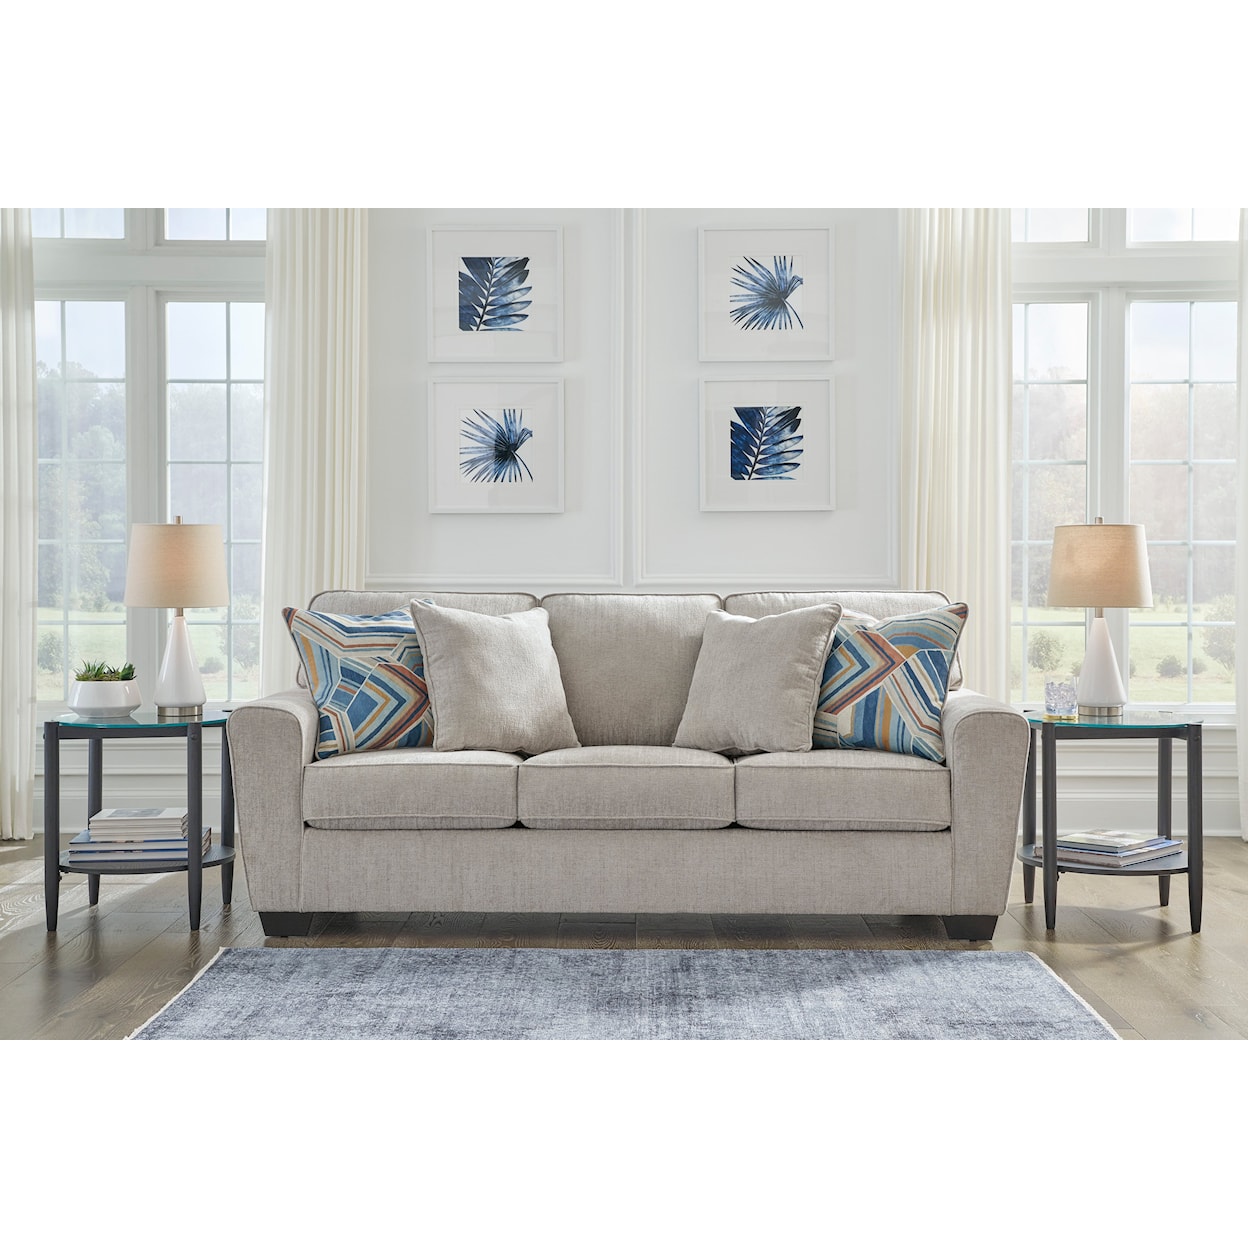 Ashley Furniture Cashton 4060639 Contemporary Upholstered Queen Sofa ...